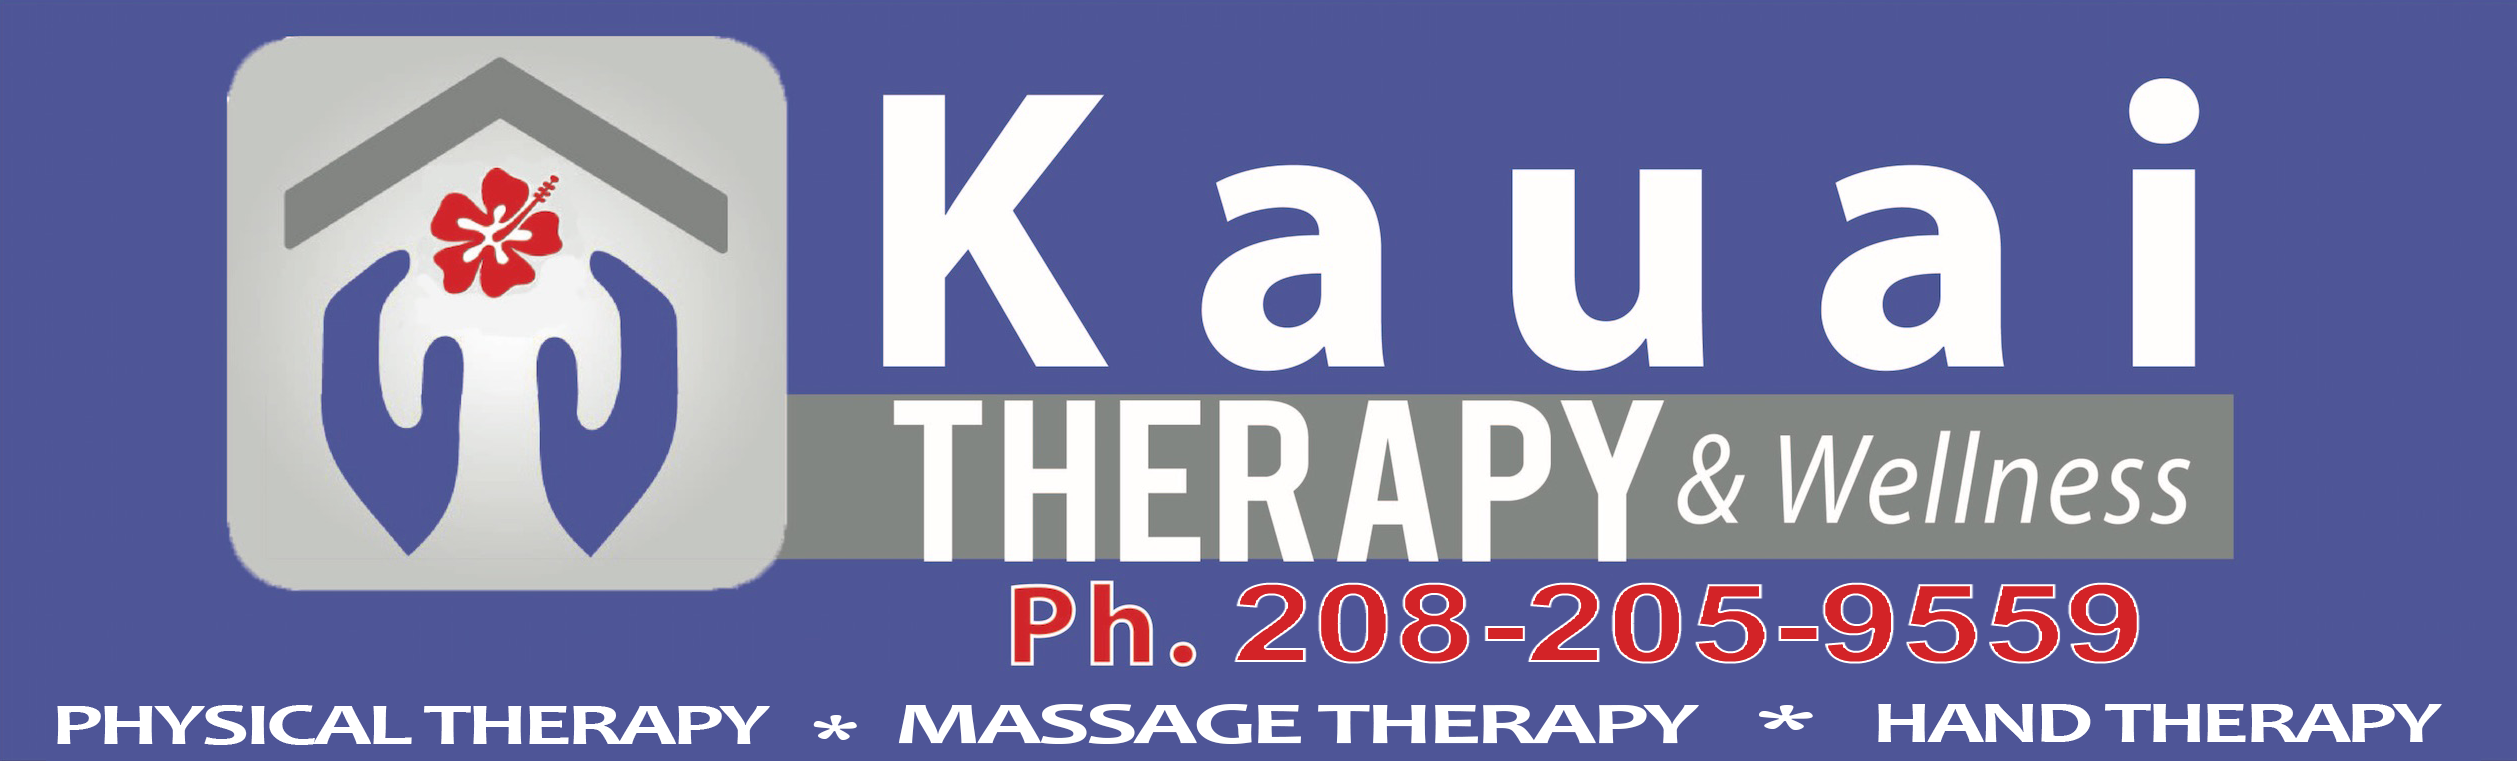 Kauai Therapy and Wellness Logo